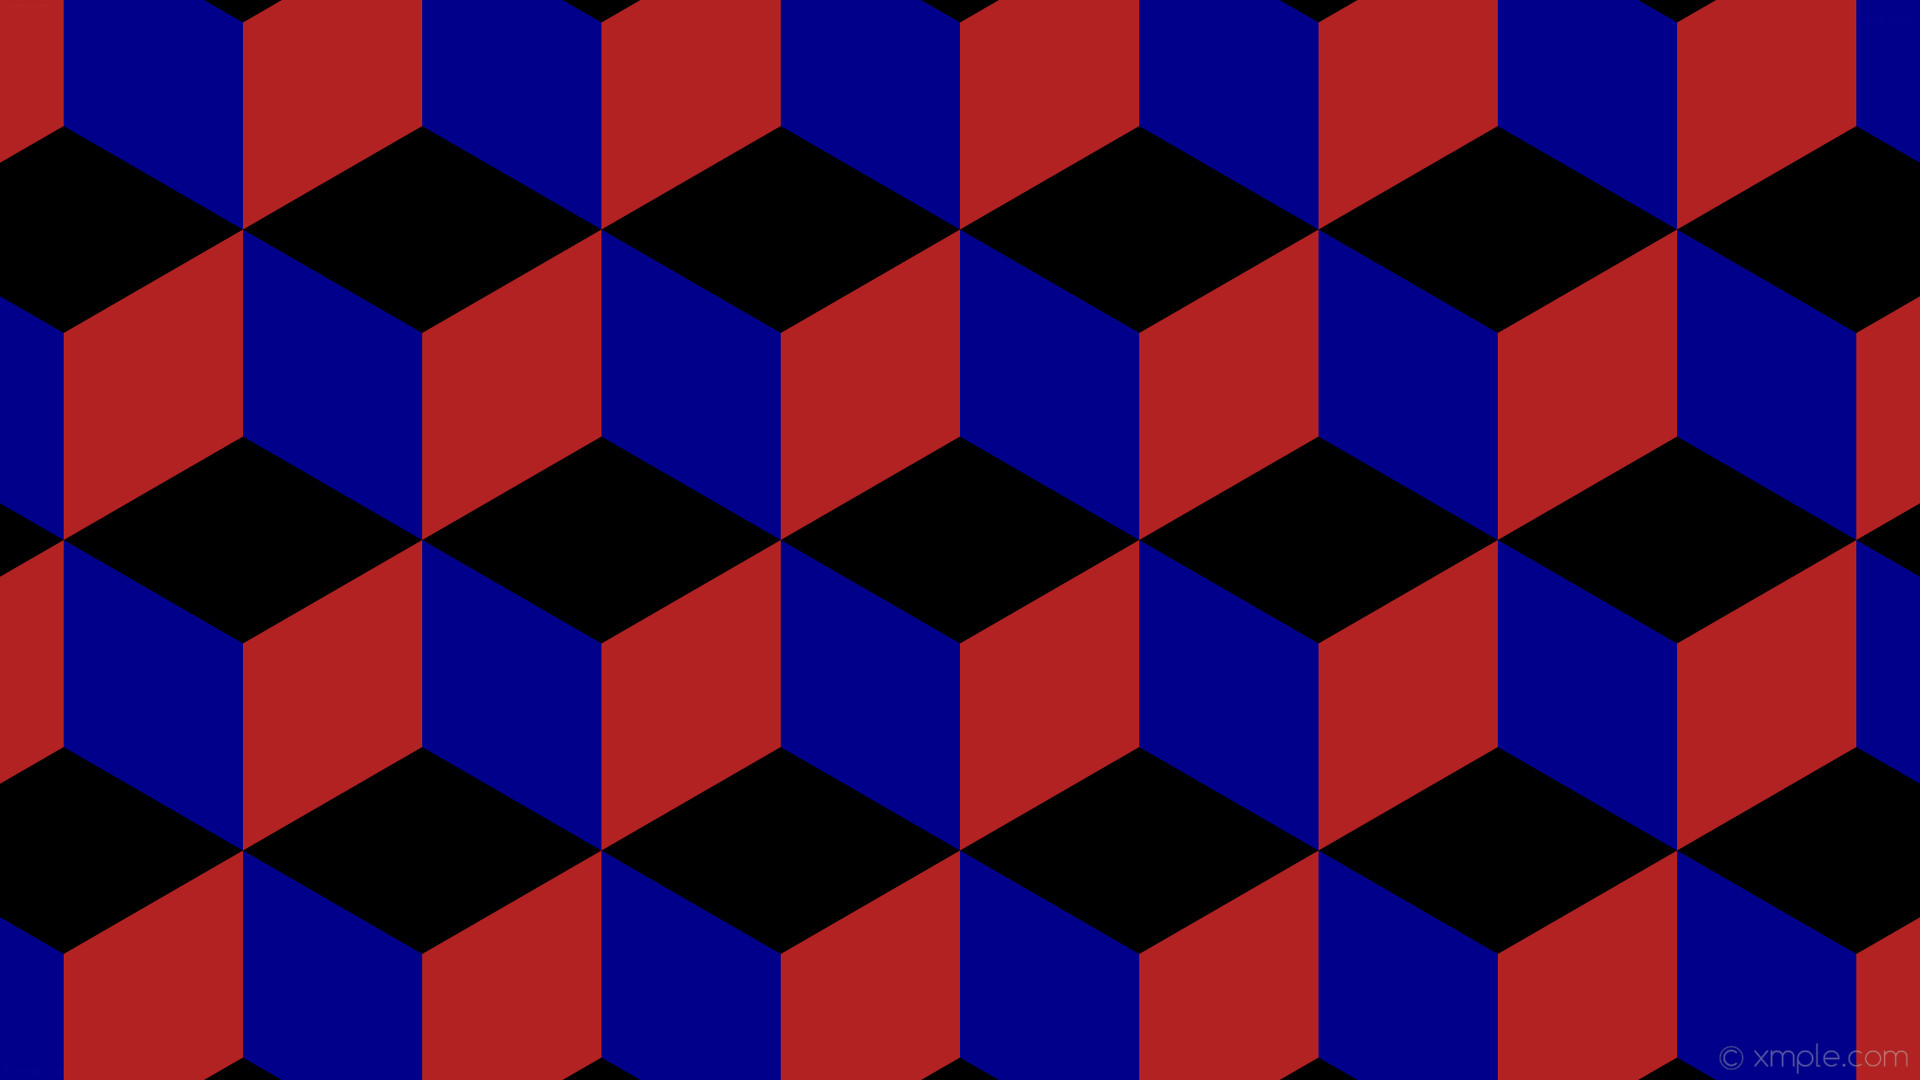 1920x1080 wallpaper red 3d cubes blue black dark blue fire brick #000000 #00008b  #b22222